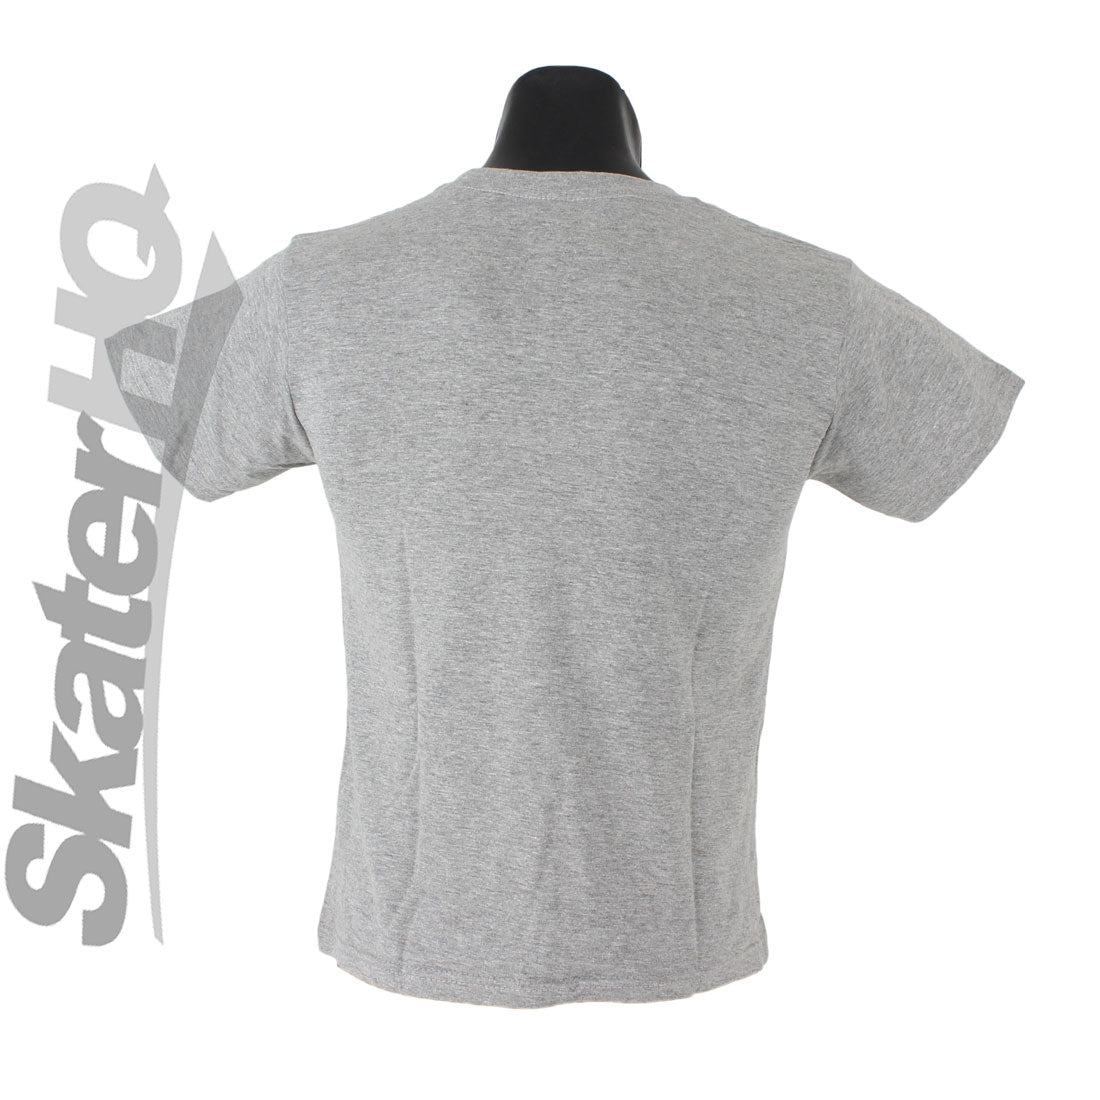 Skater HQ Kids Stacked T-Shirt - Grey Apparel Skater HQ Clothing